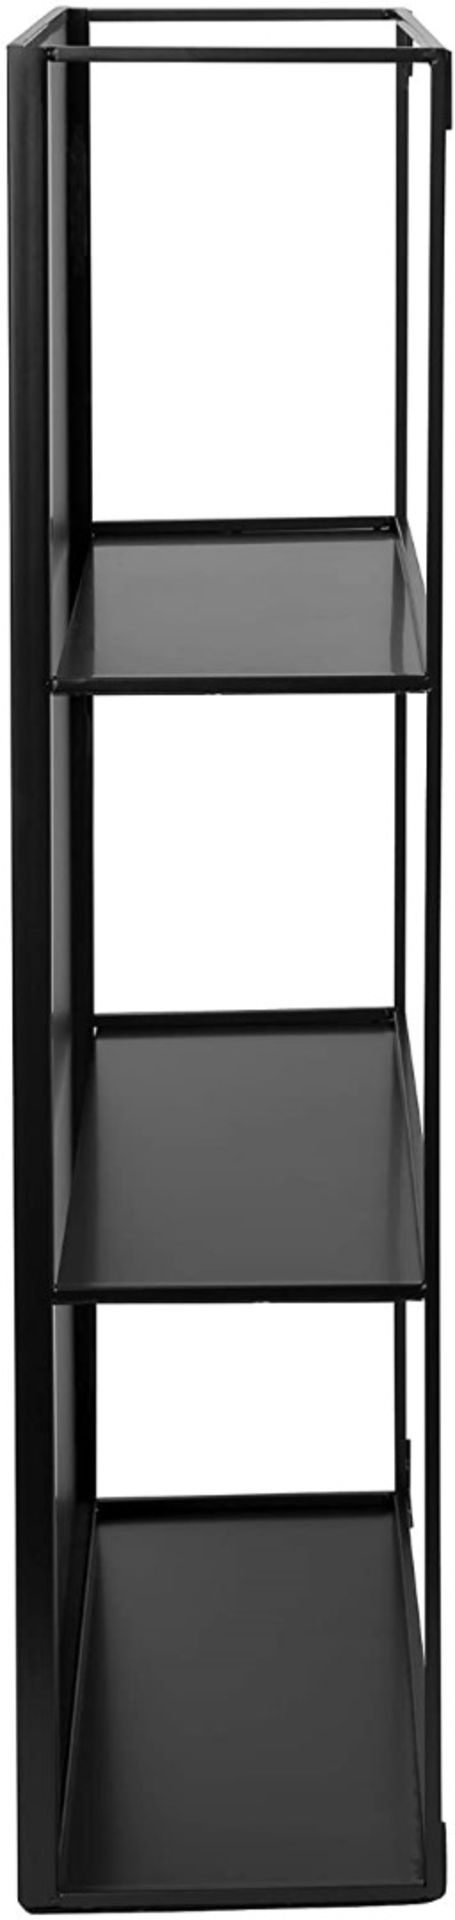 1 x Umbra 'CUBIKO' Sleek Modern Mirrored Medicine Cabinet With A Black Metal Frame - Dimensions: - Image 6 of 8